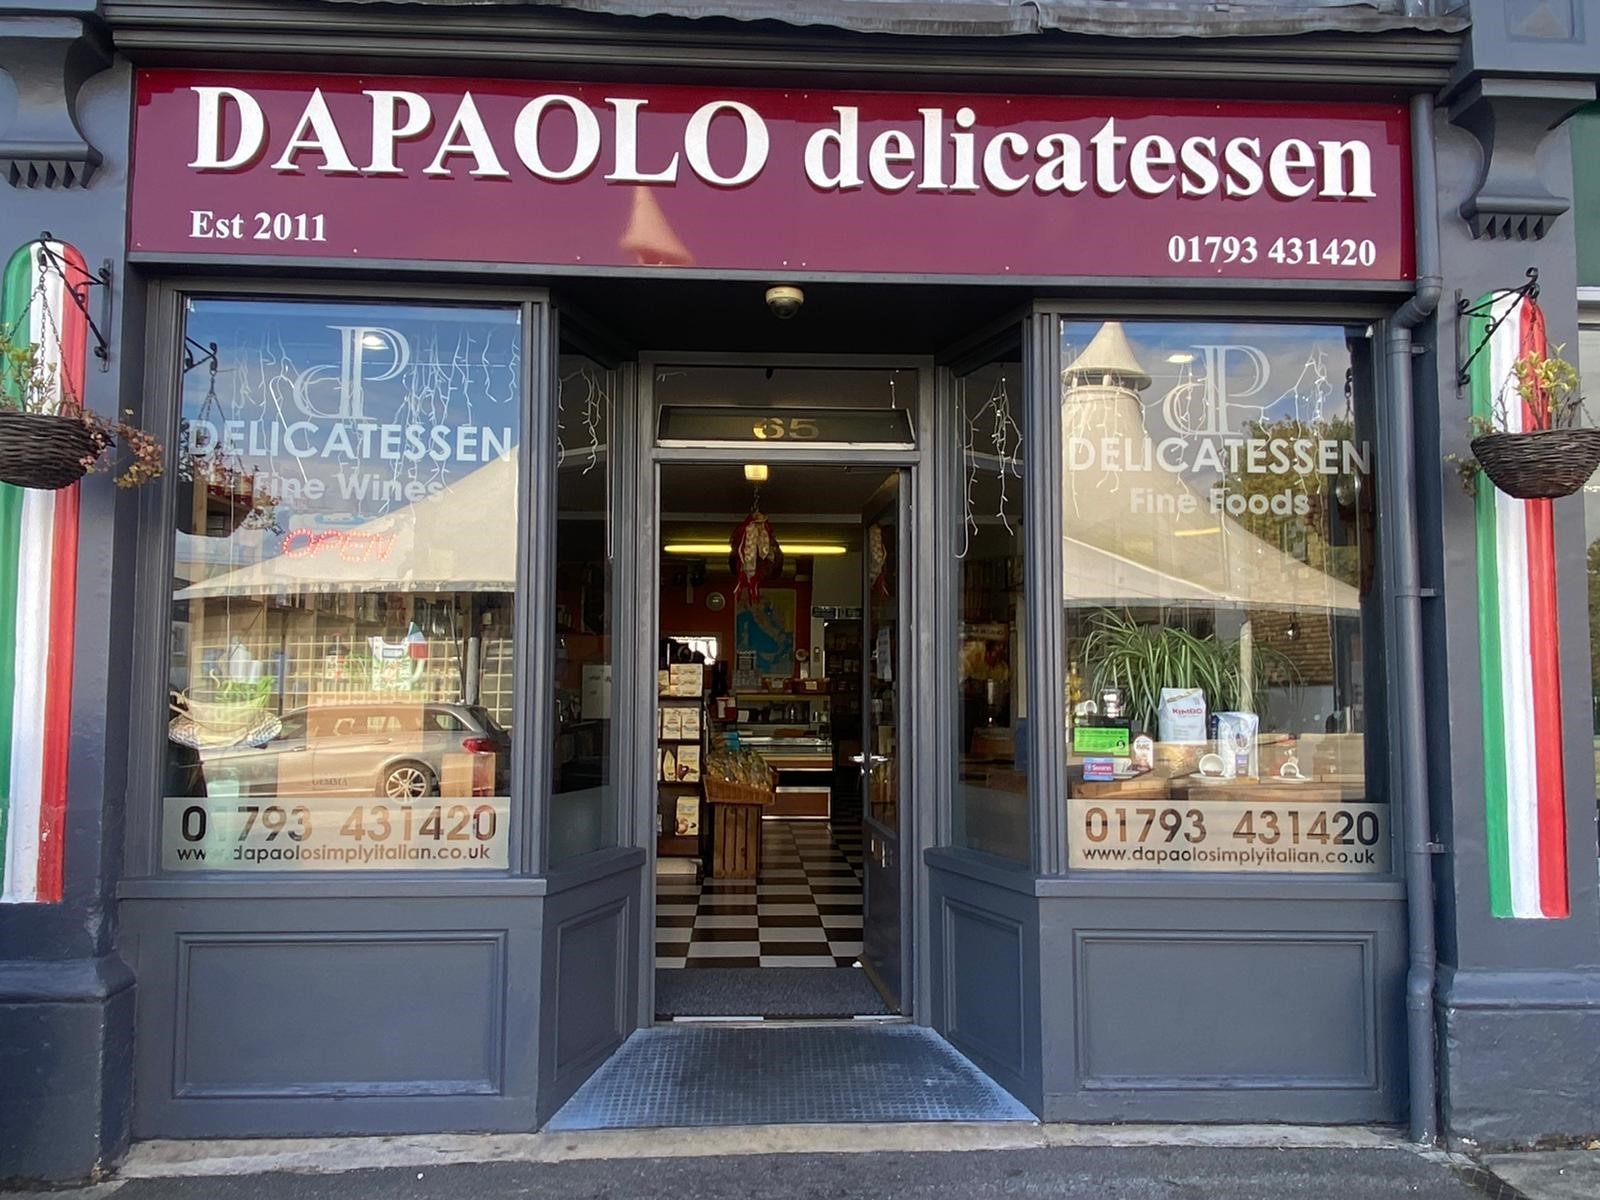 DaPaolo Delicatessen on Commercial Road